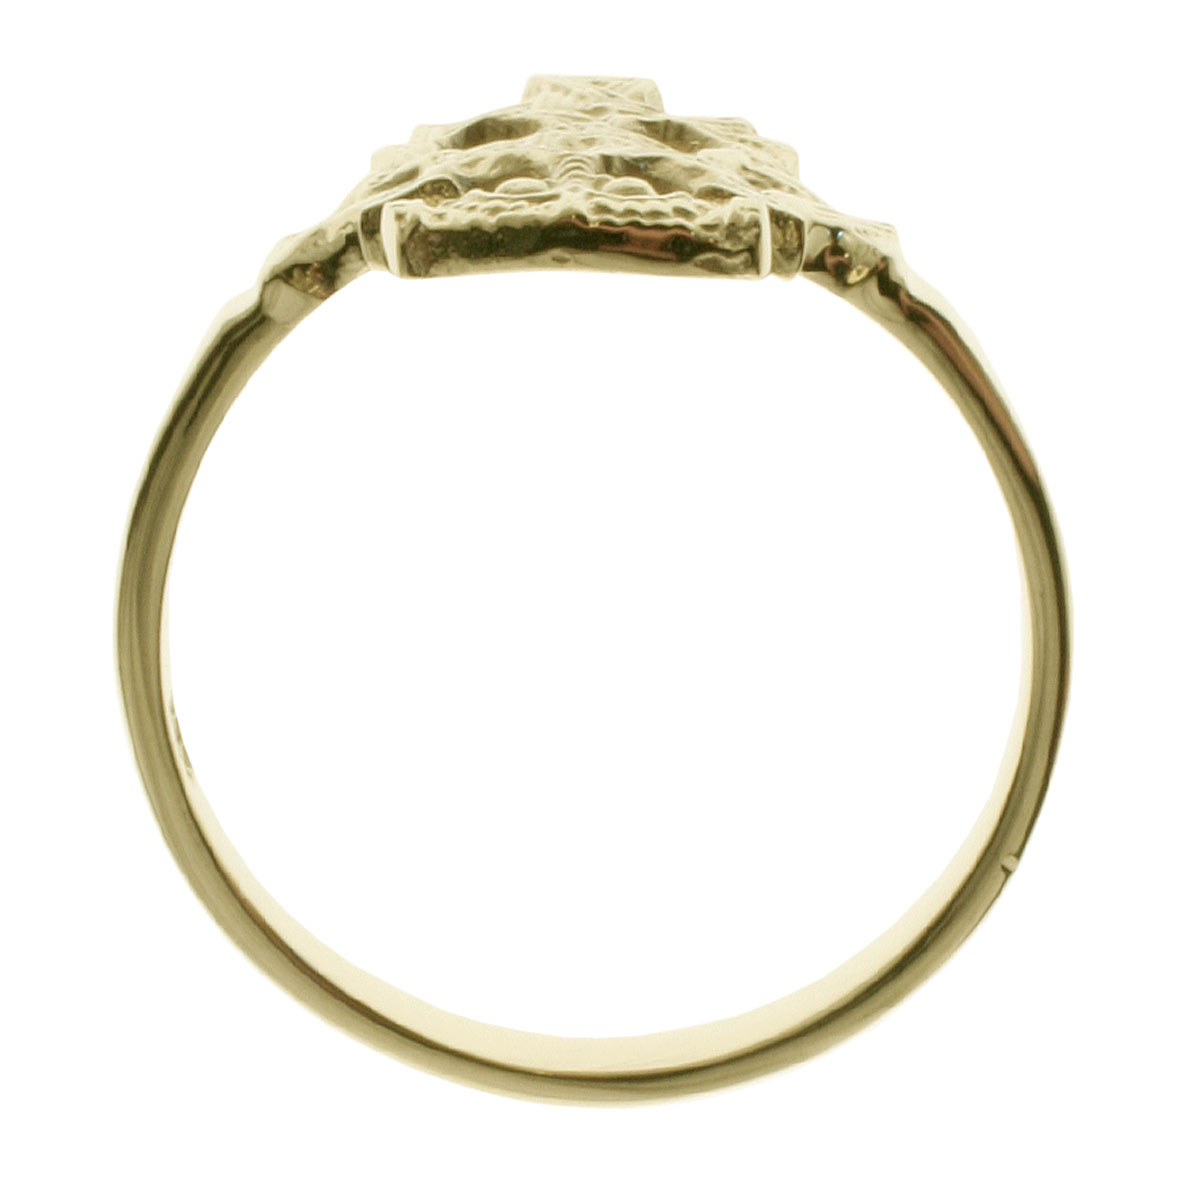 Ring Hiddensee Silber vergoldet, -Größe wählbar-